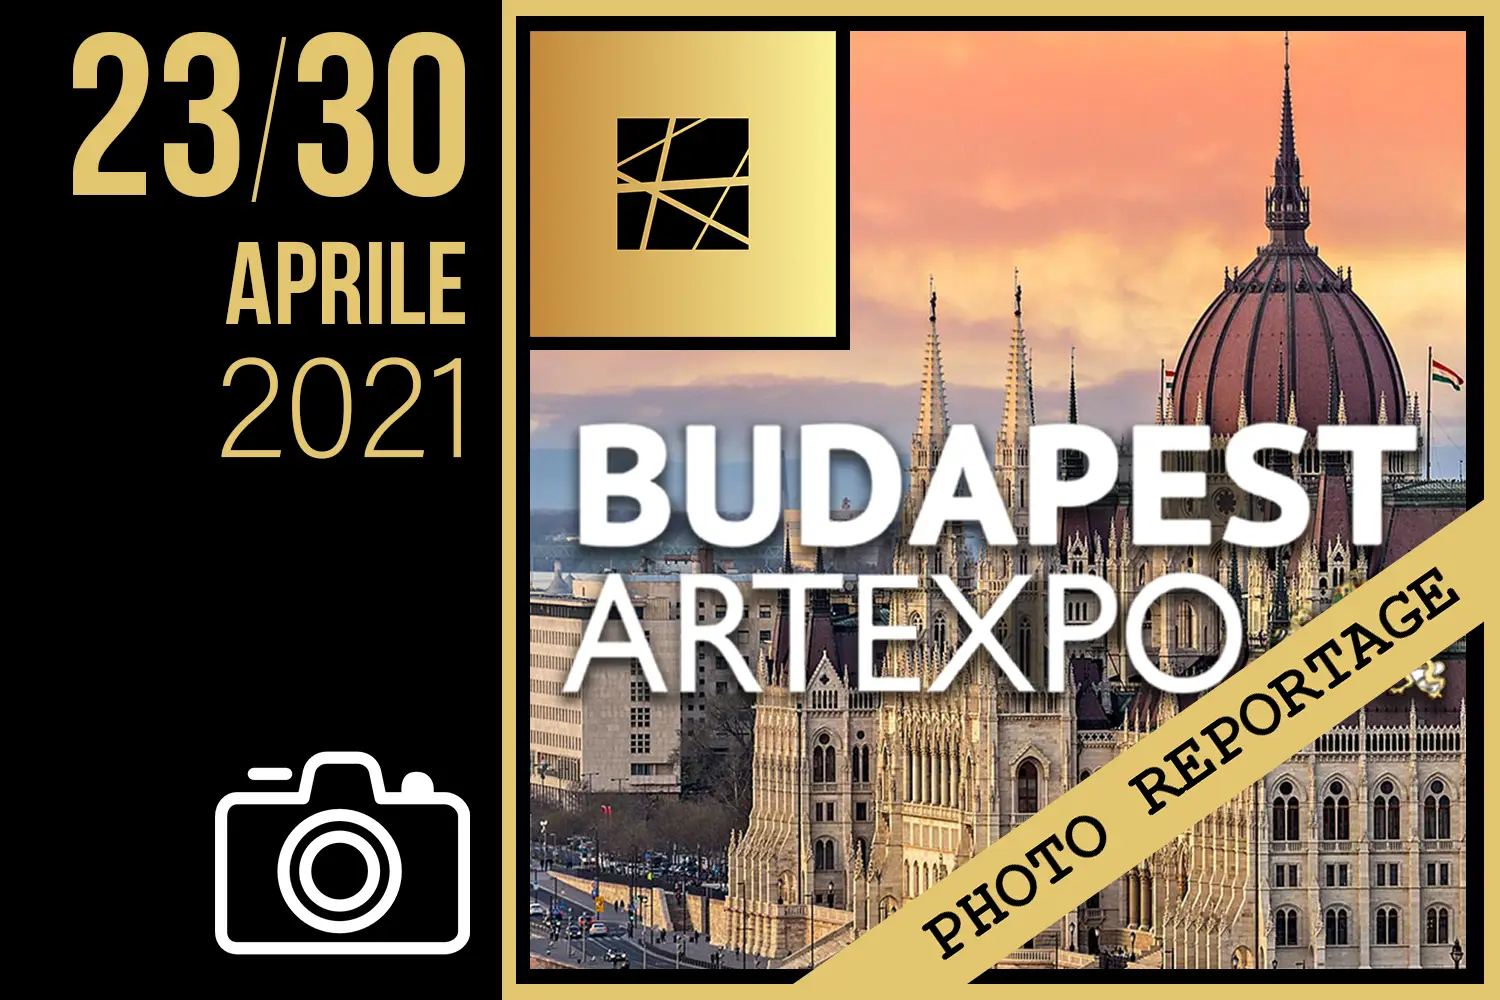 INTERNAZIONALE BUDAPEST ARTEXPO - BUDAPEST - 23/30 aprile 2021